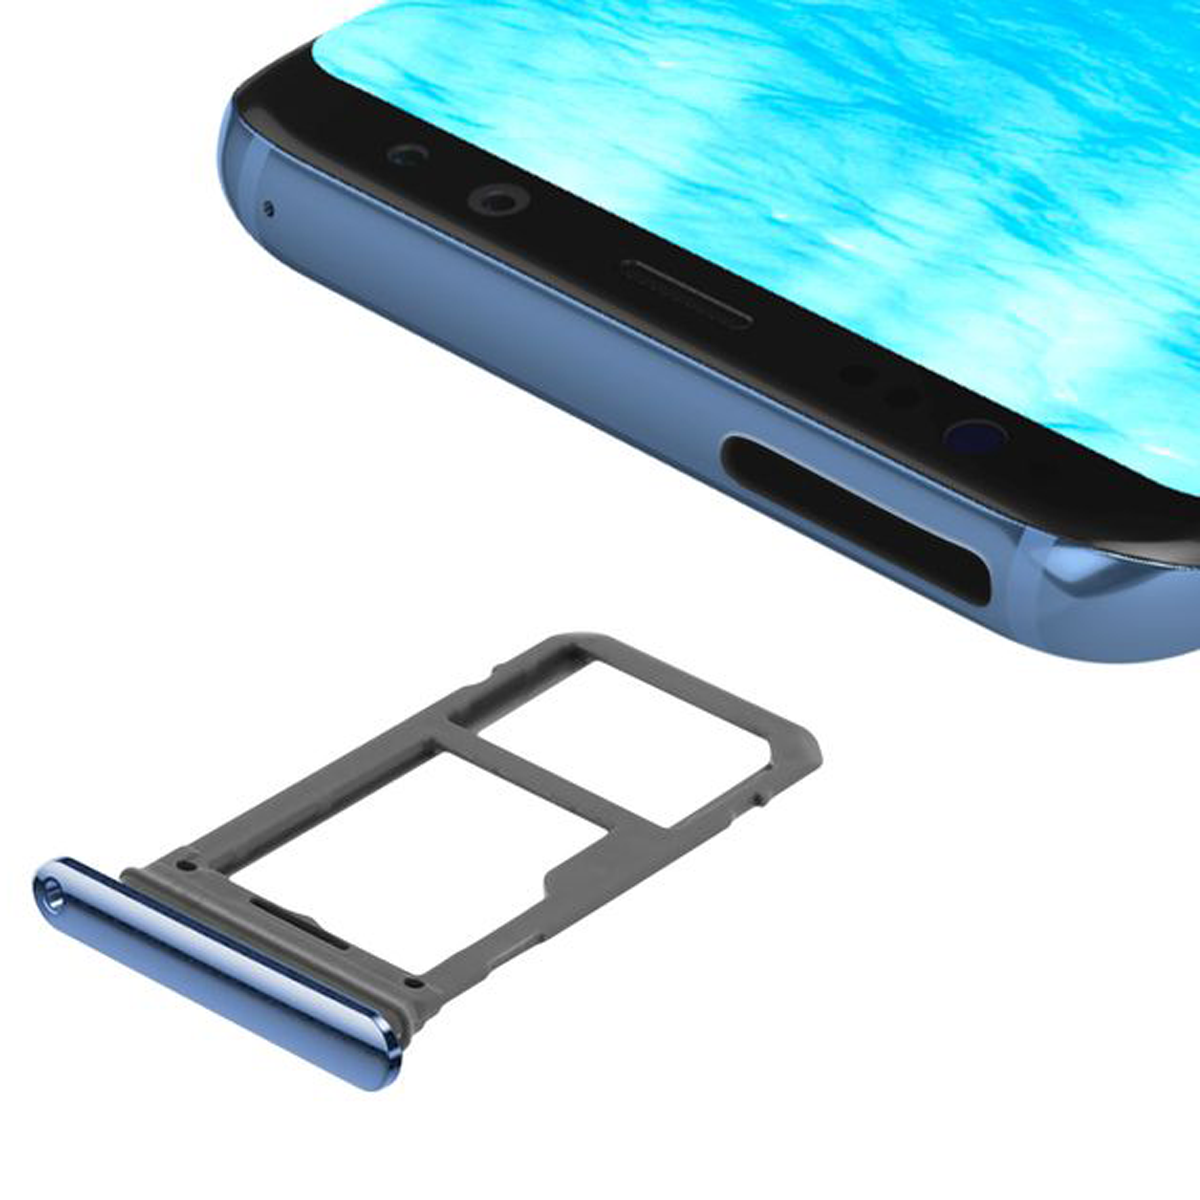 Safata Sim Per Samsung Galaxy S8 G950 Color Blau